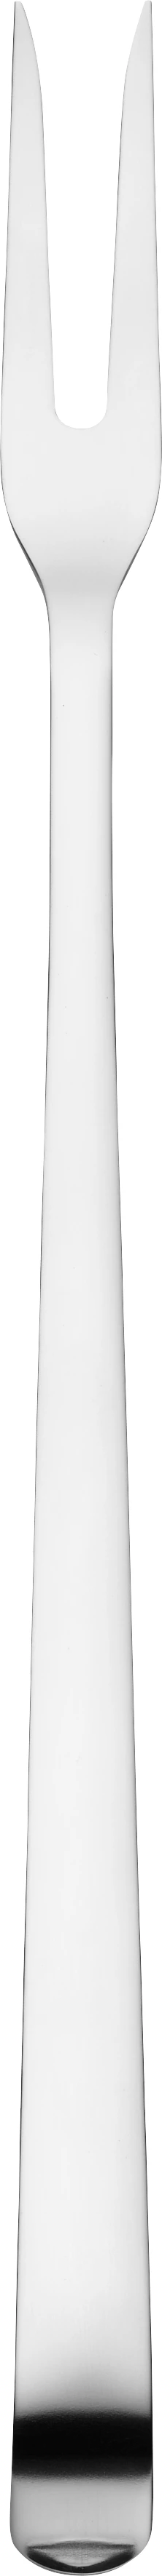 Glat serveringsgaffel, 37,5 cm